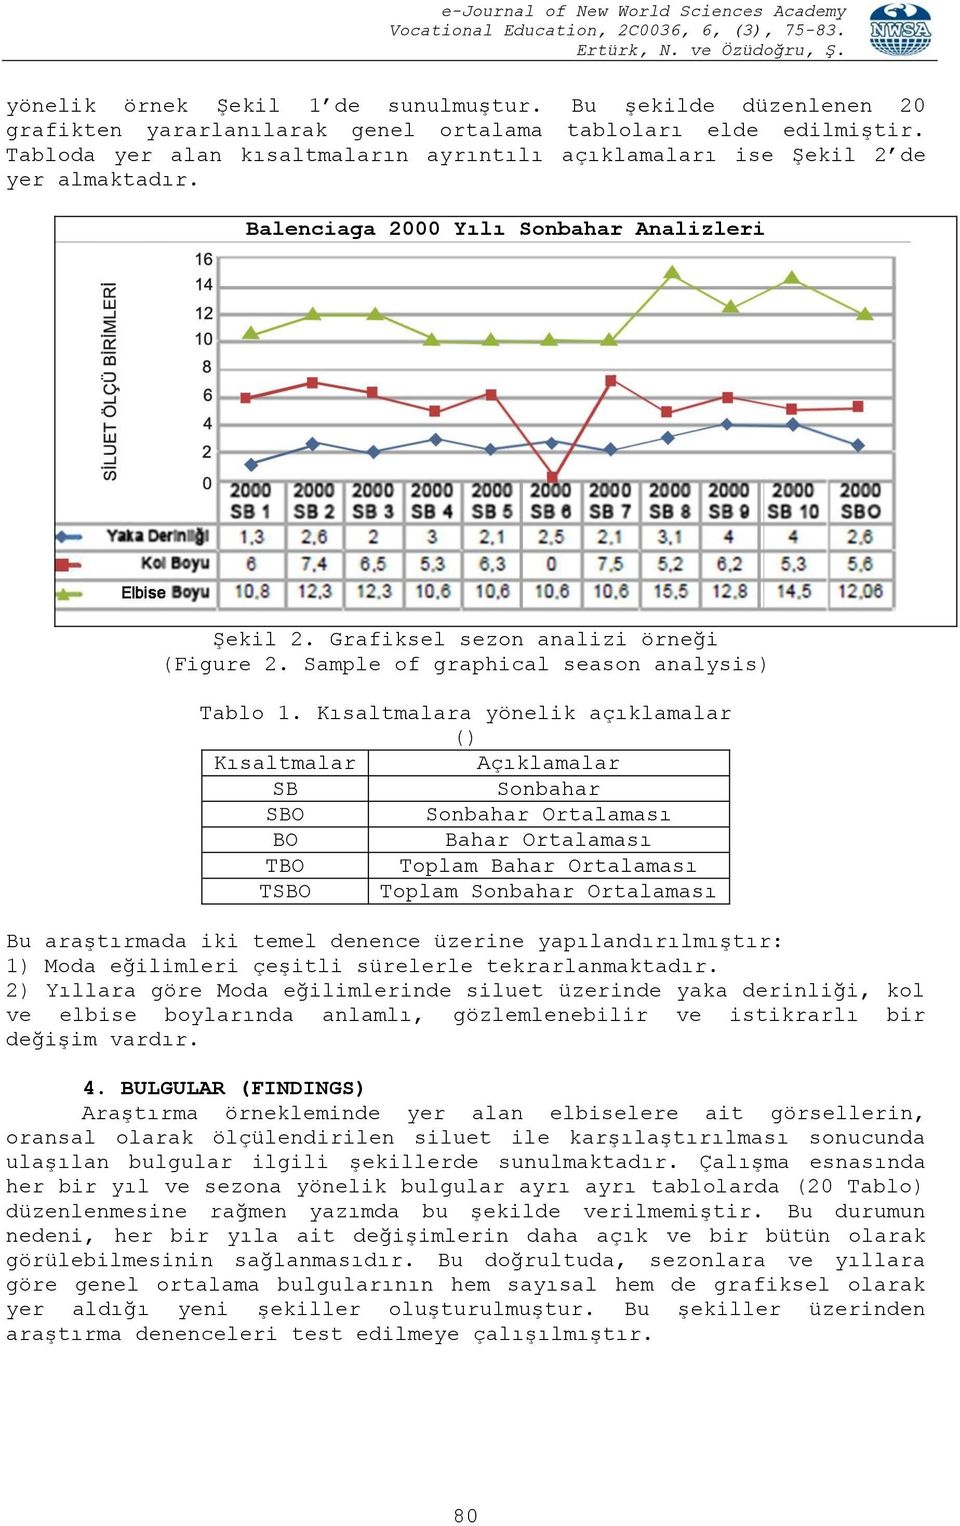 Sample of graphical season analysis) Tablo 1.